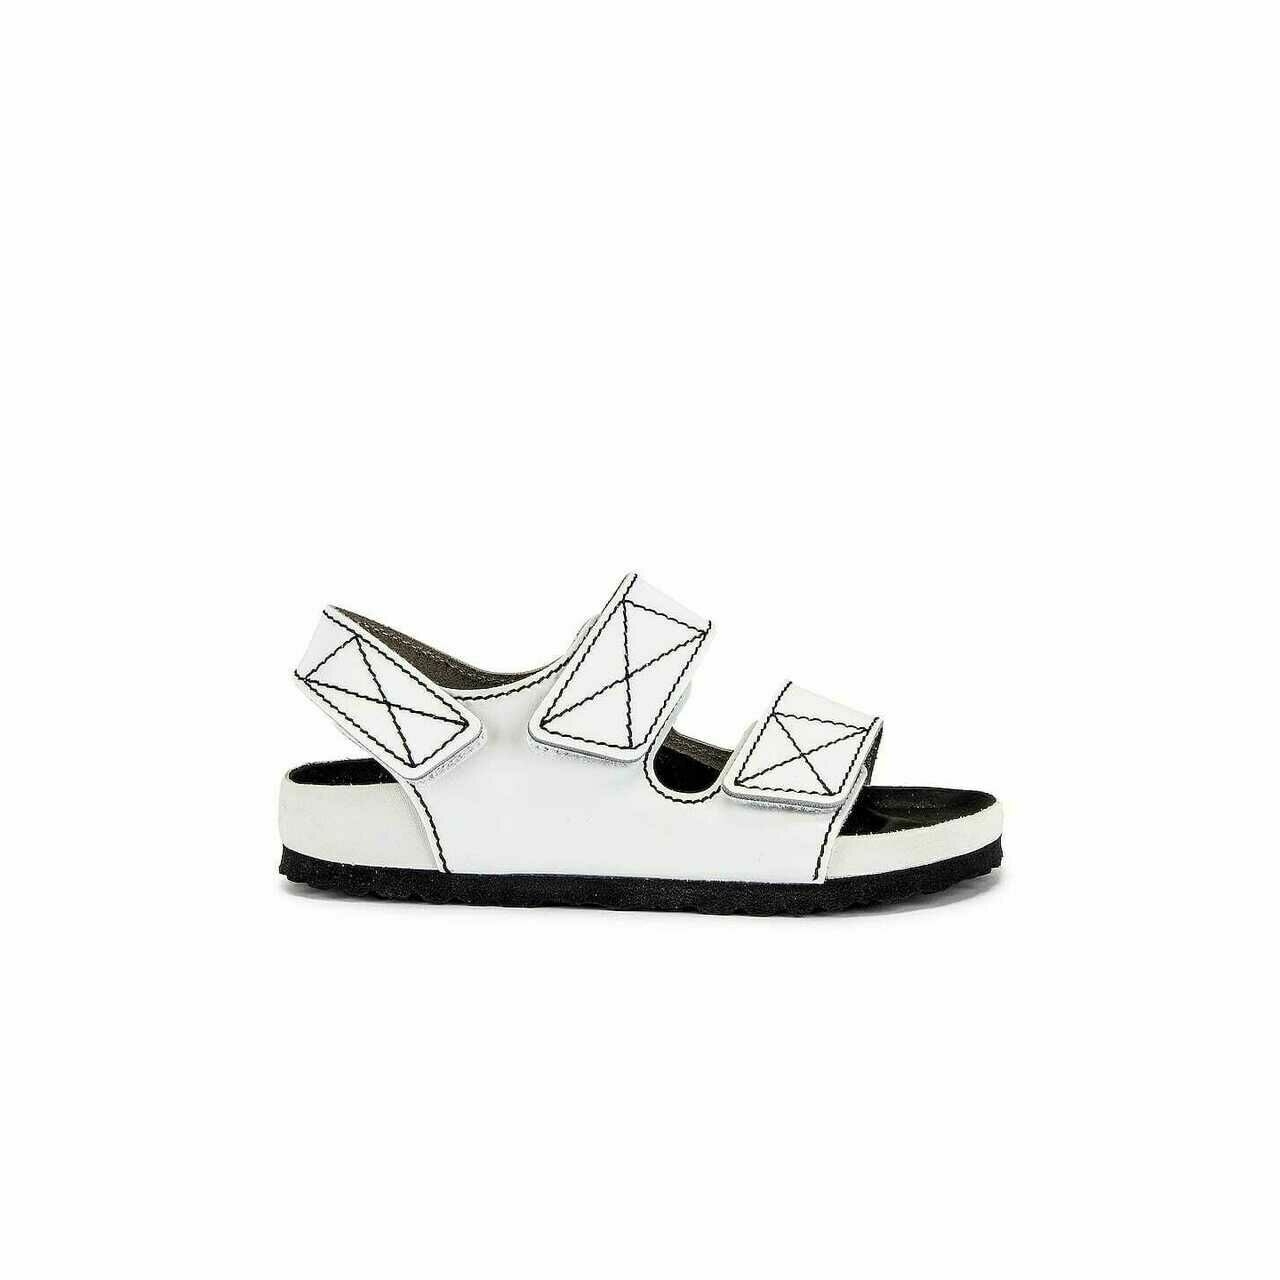 Proenza Schouler White Sandals